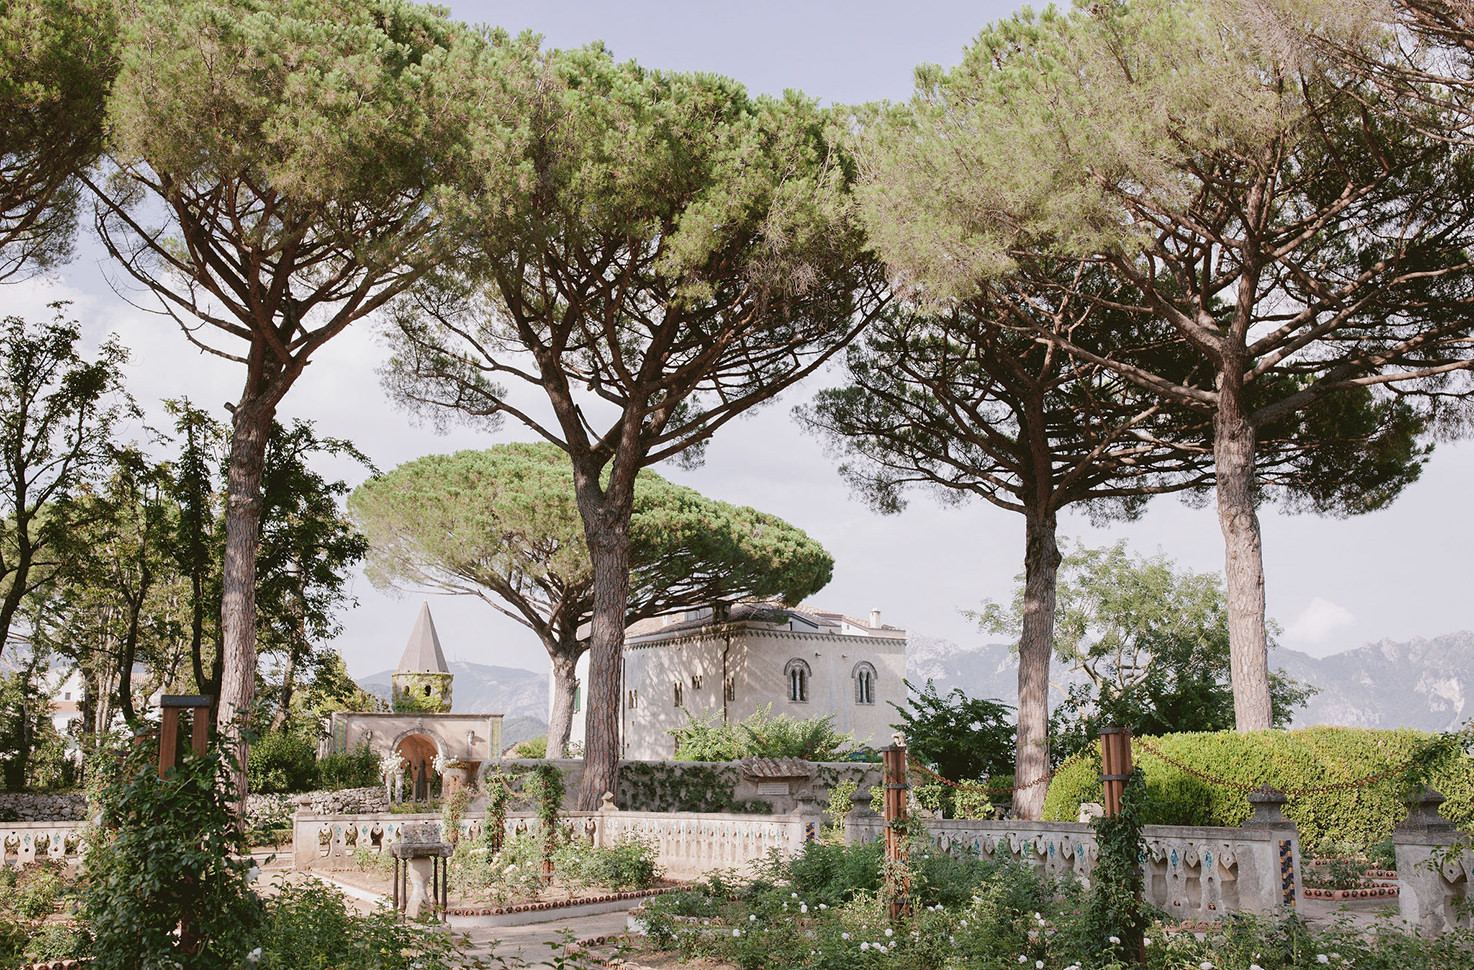 Villa Cimbrone for Weddings on the Amalfi Coast